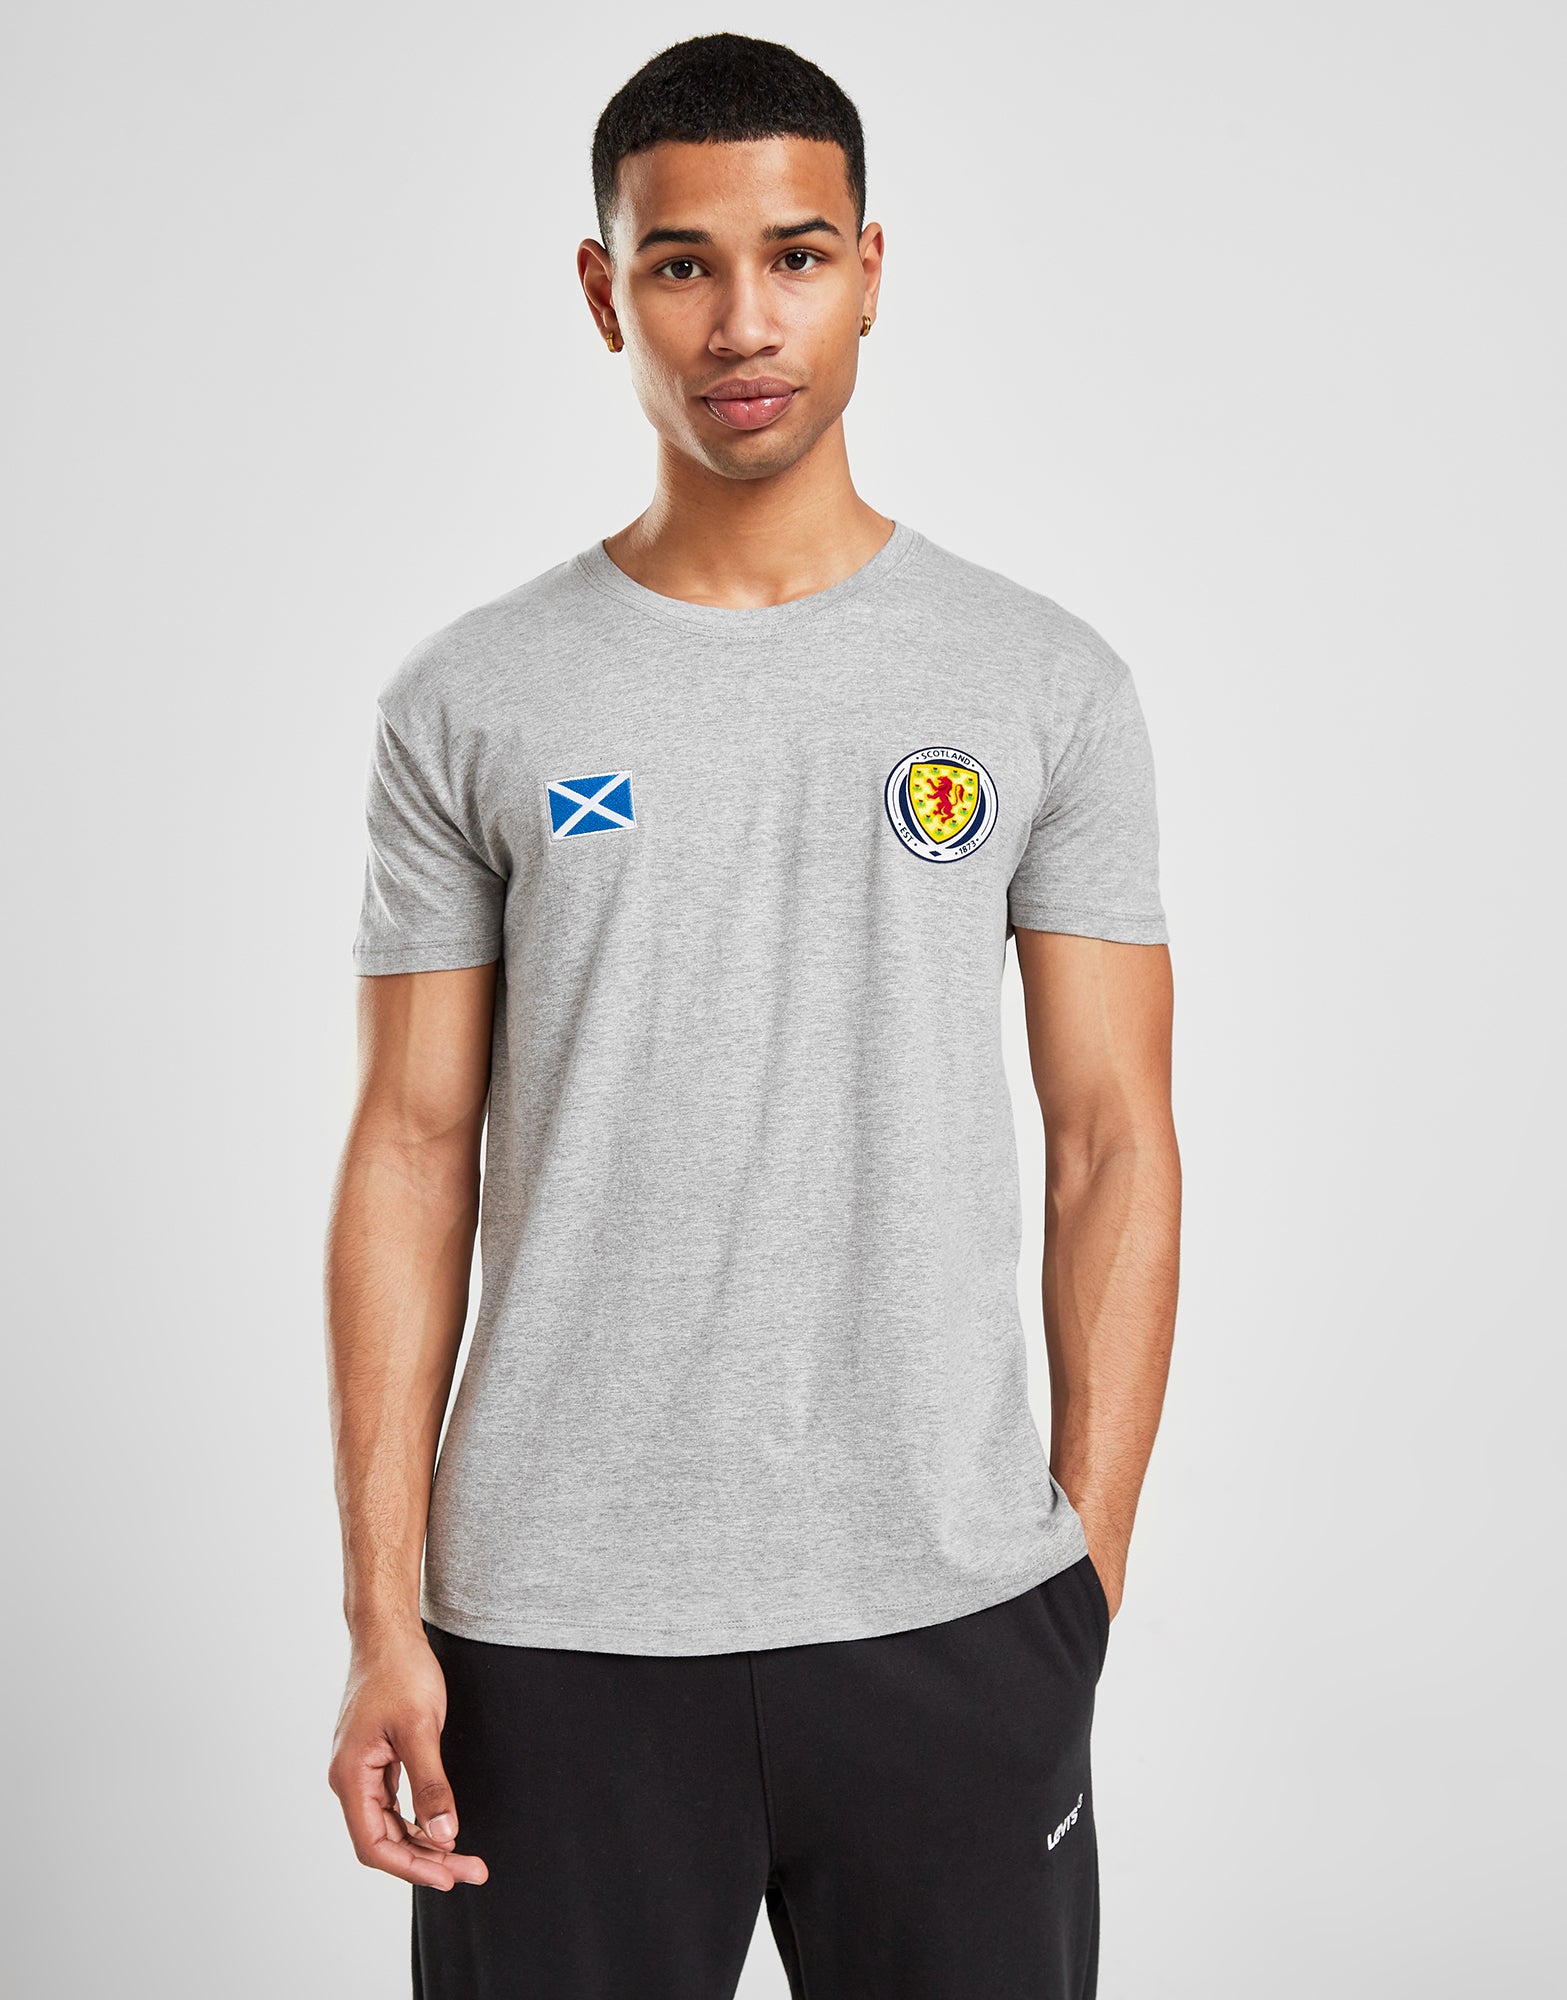 Official Team Scotland Flag and Badge T-Shirt - Grey